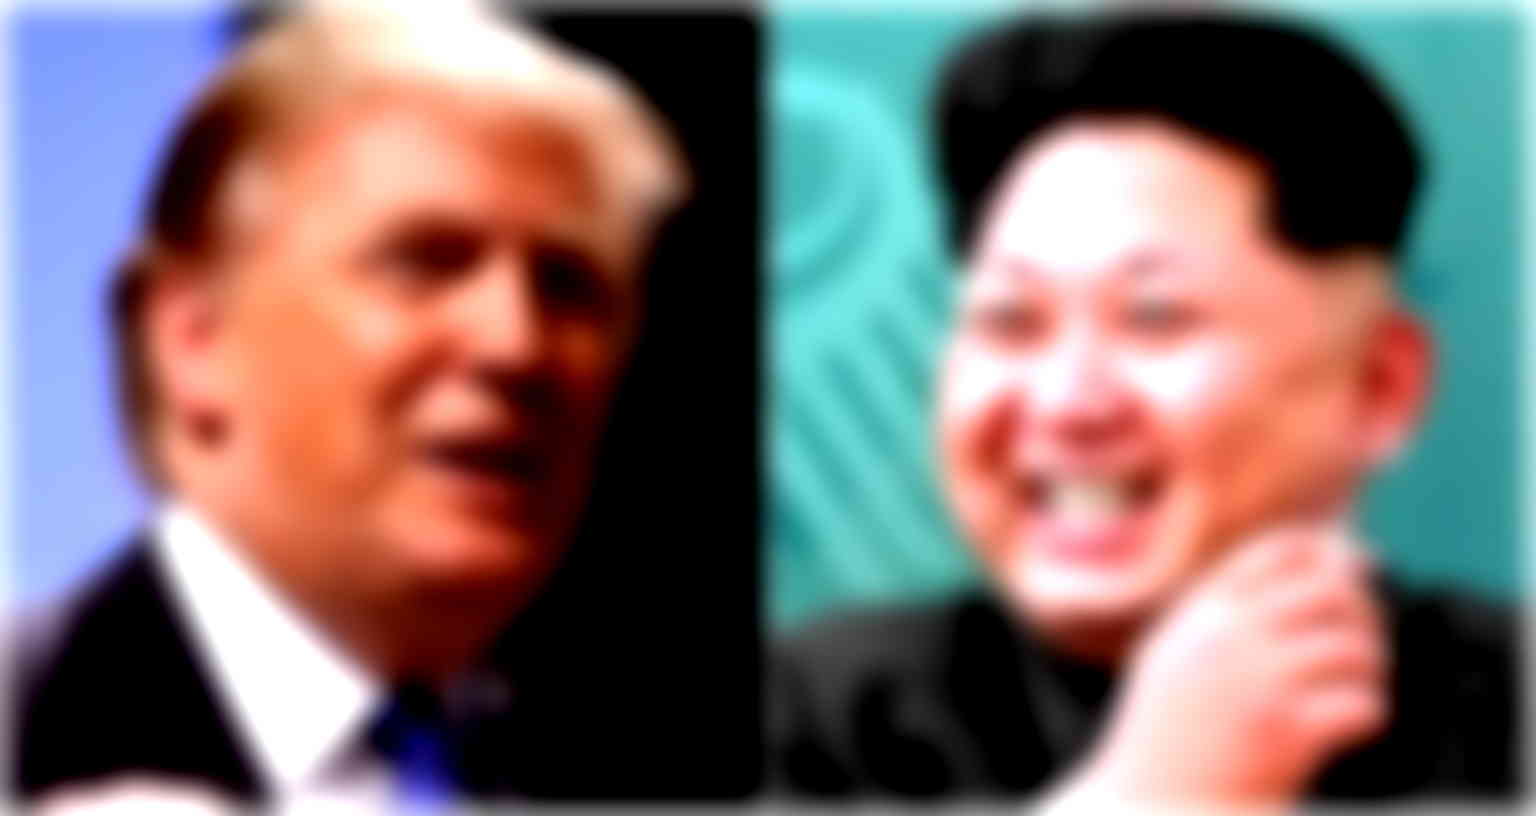 Kim Jong Un Wants a Peace Treaty With Donald Trump